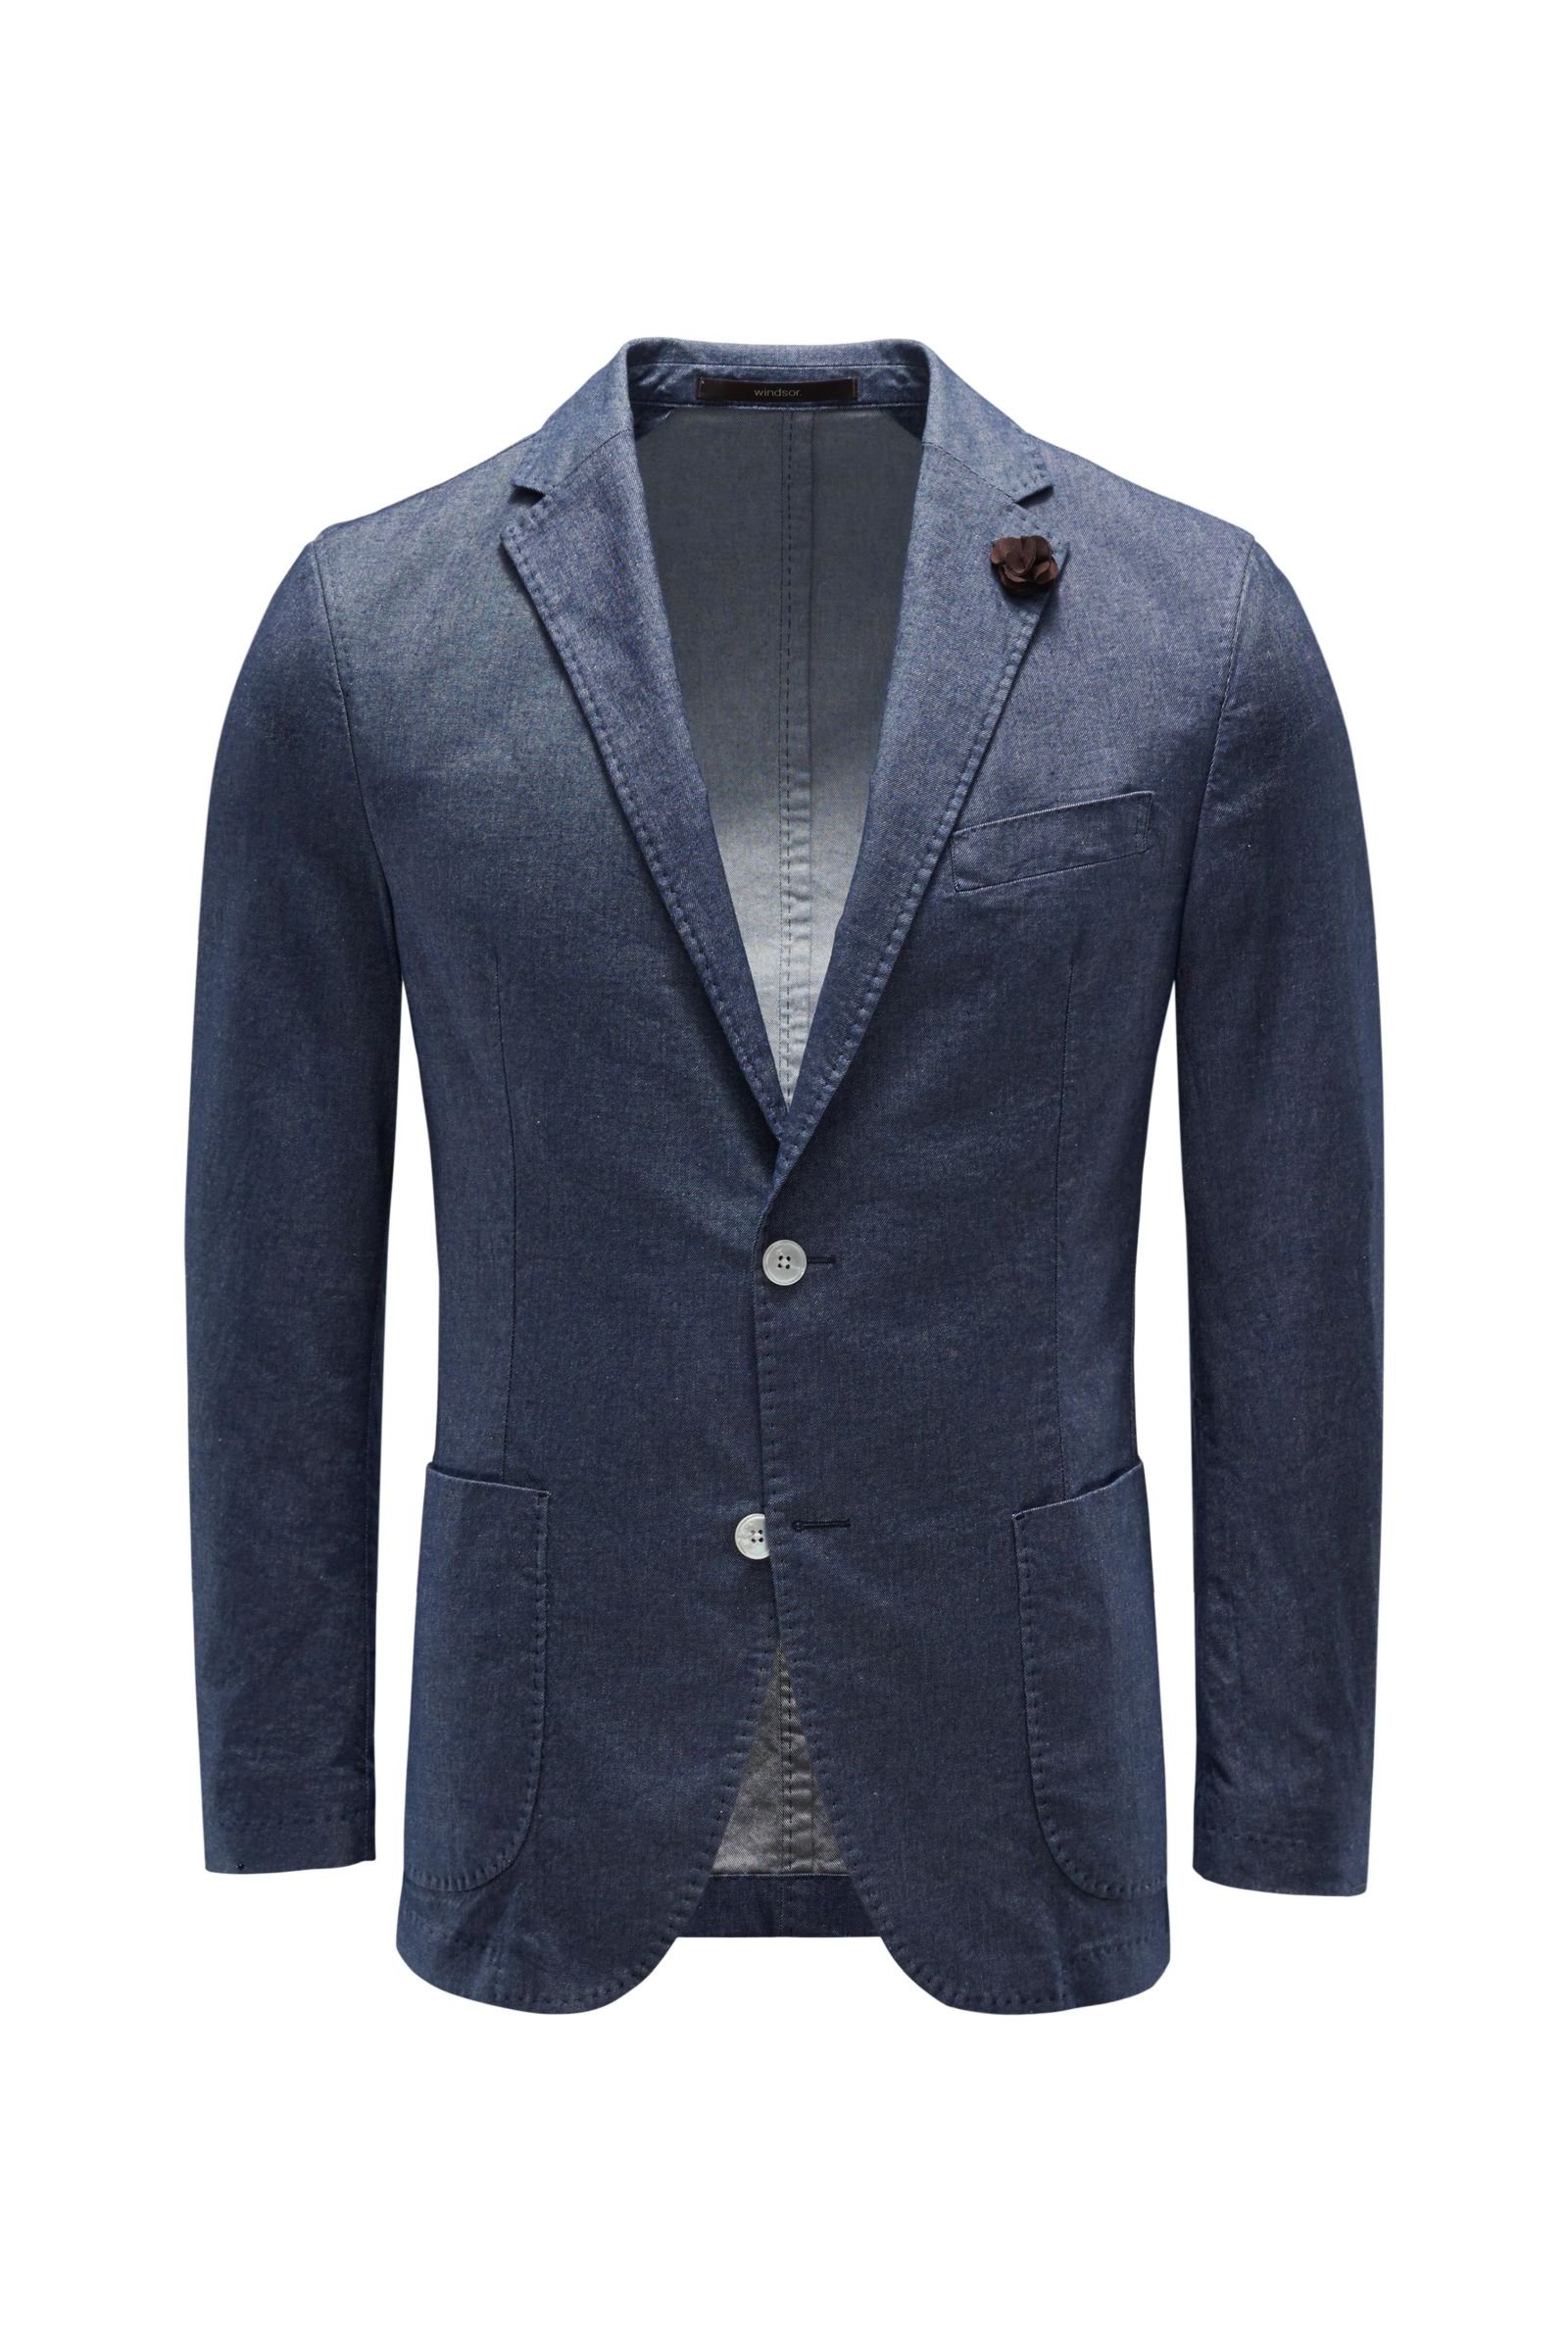 Smart-casual denim jacket 'Giro' grey-blue